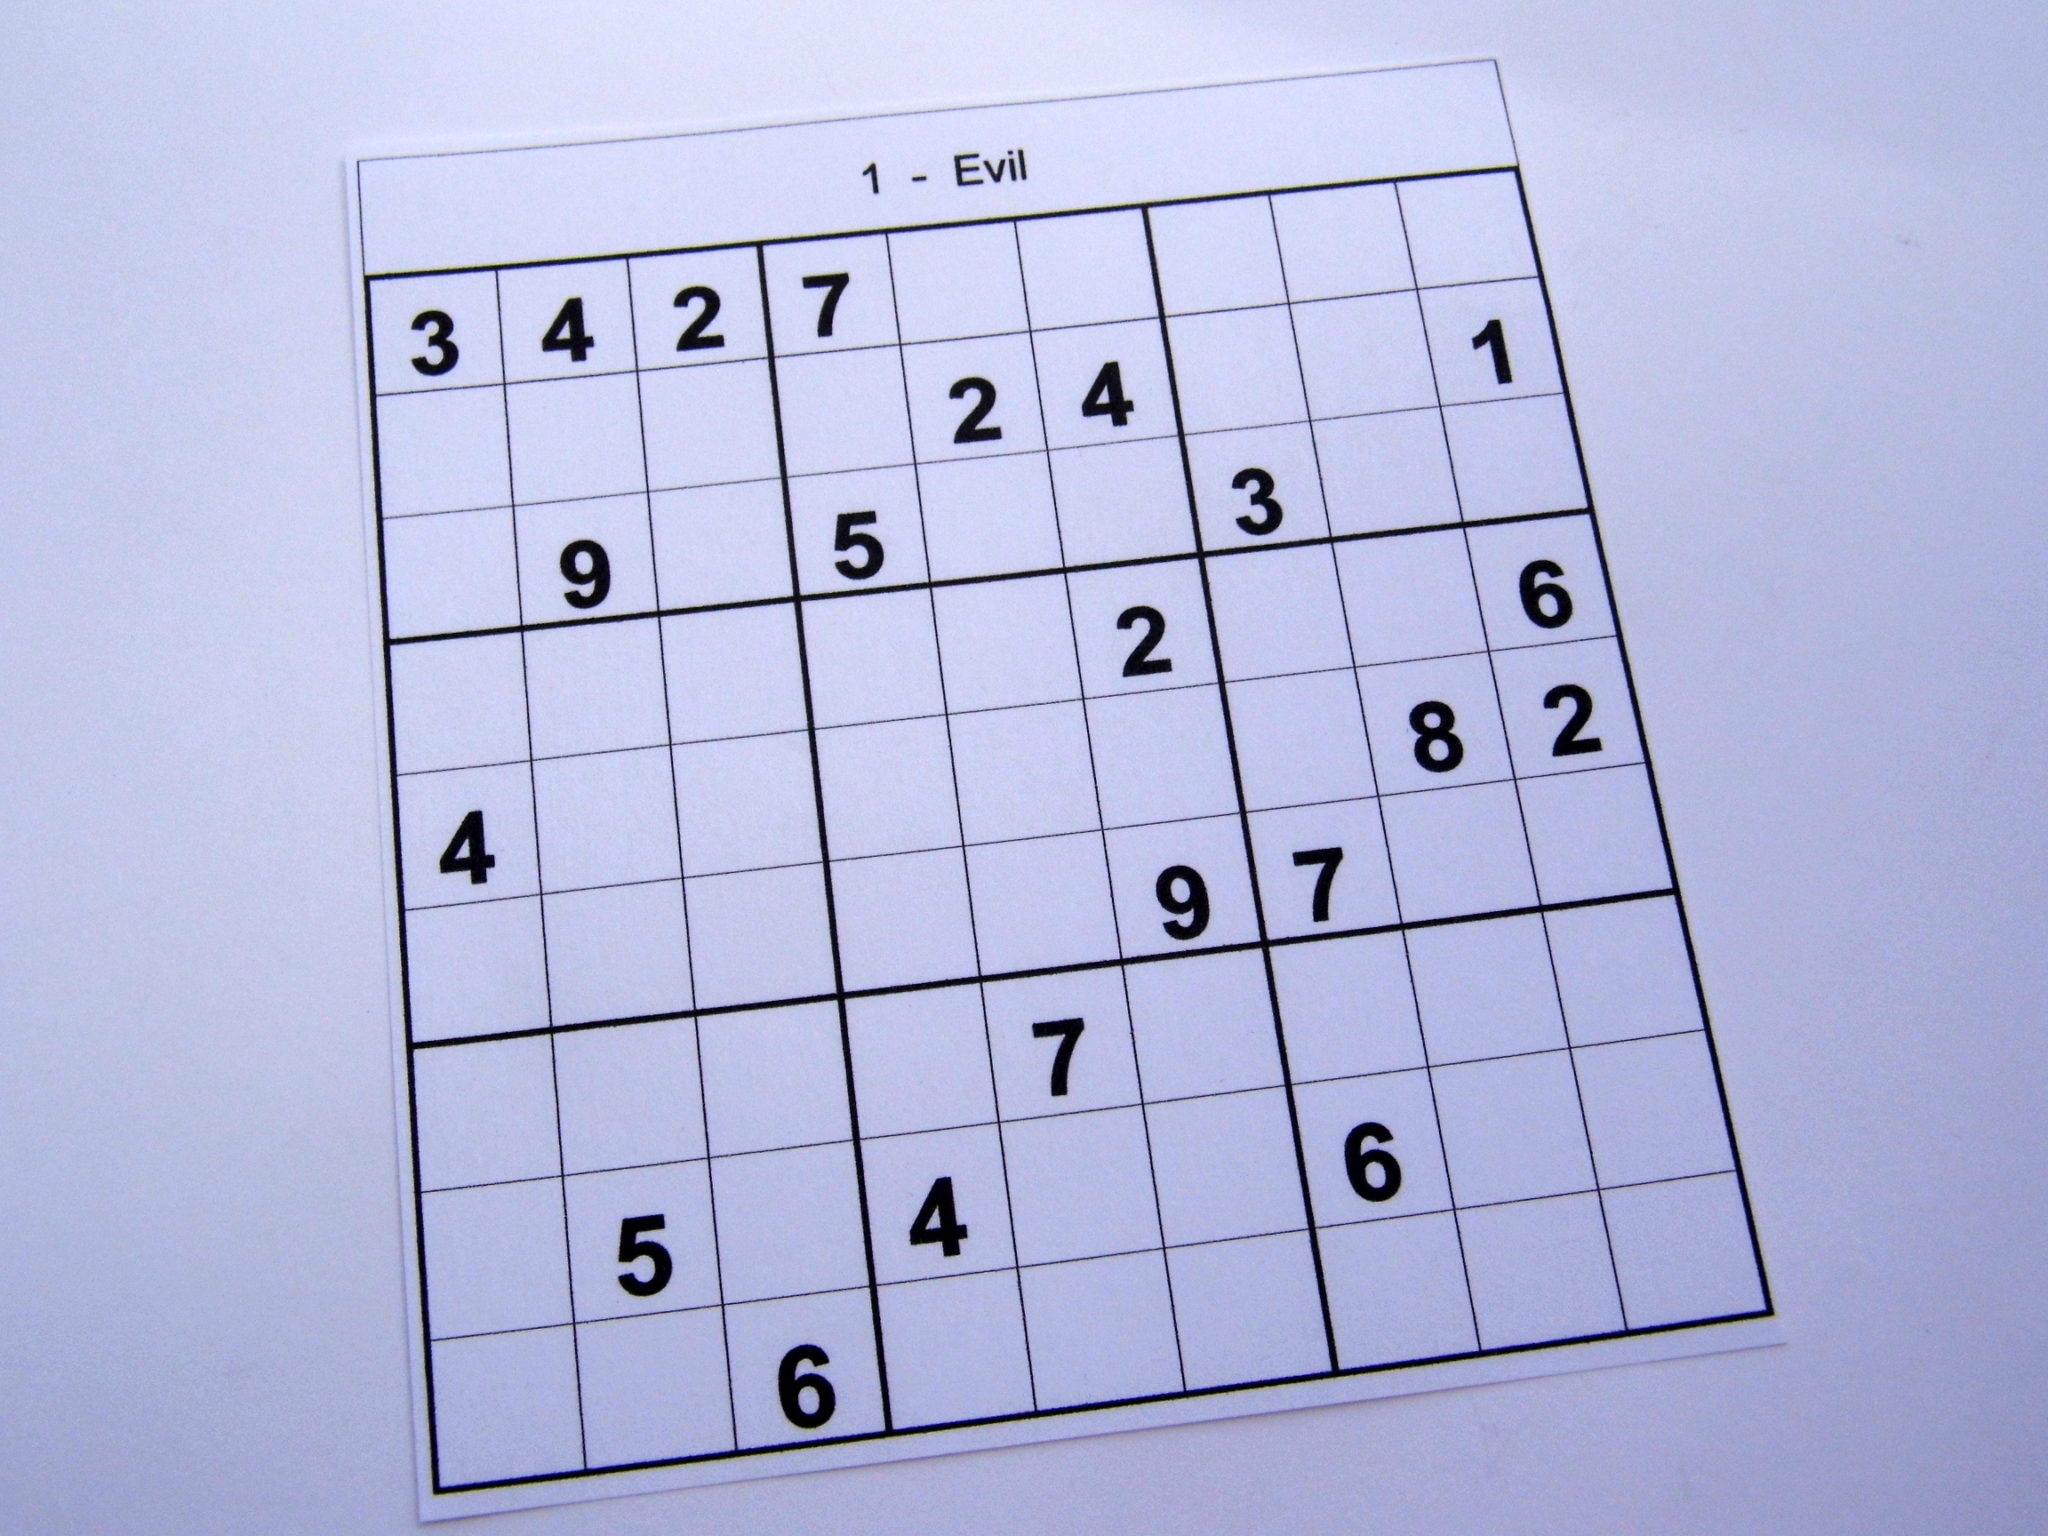 sudoku puzzles for publication